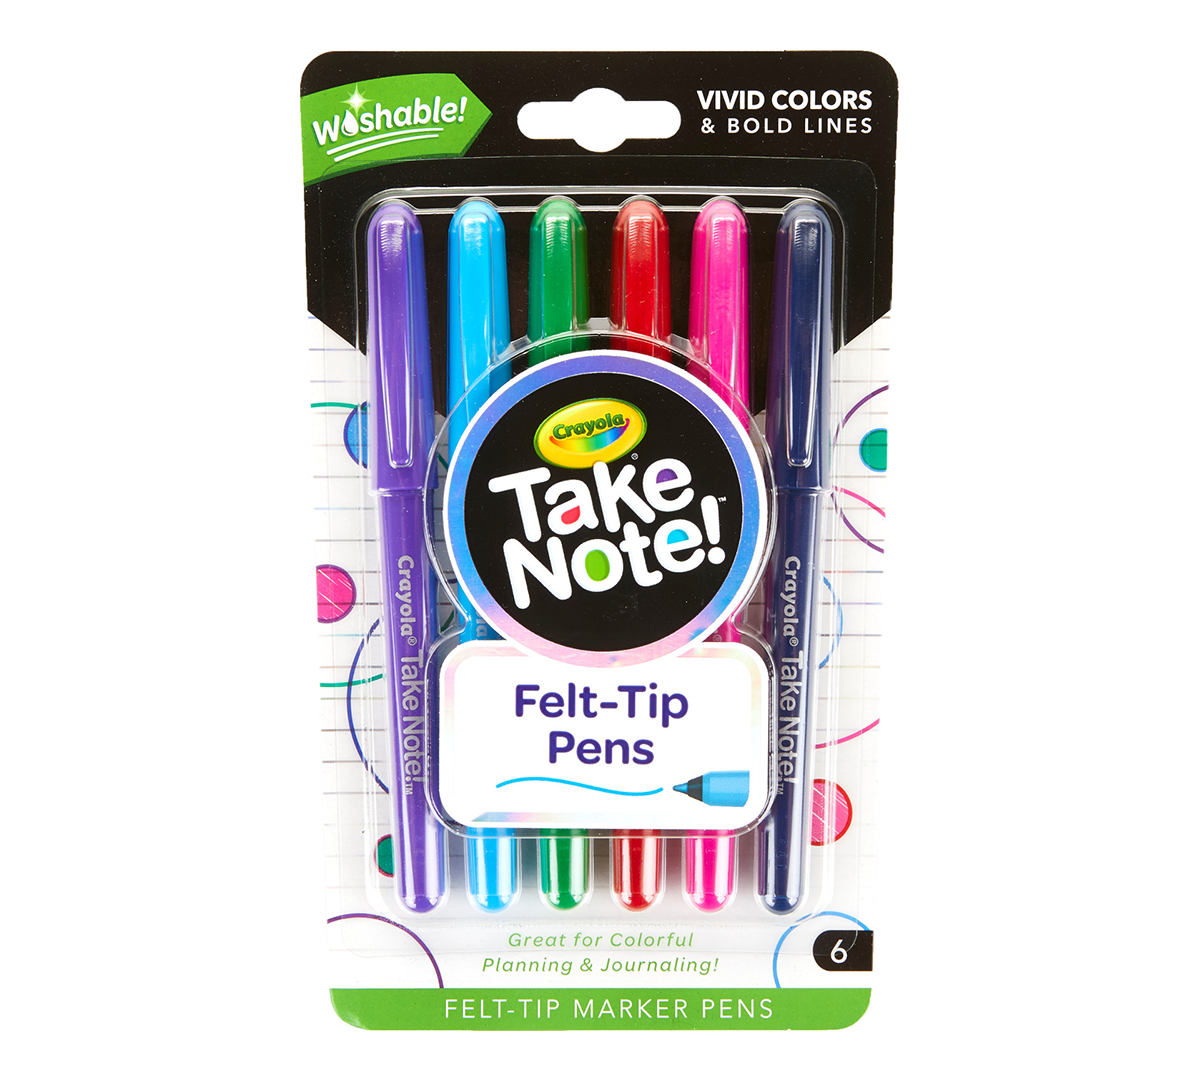 Sense 10352 20-Pack Mini Markers Washable Felt Tip Colouring Pens for Children and Kids